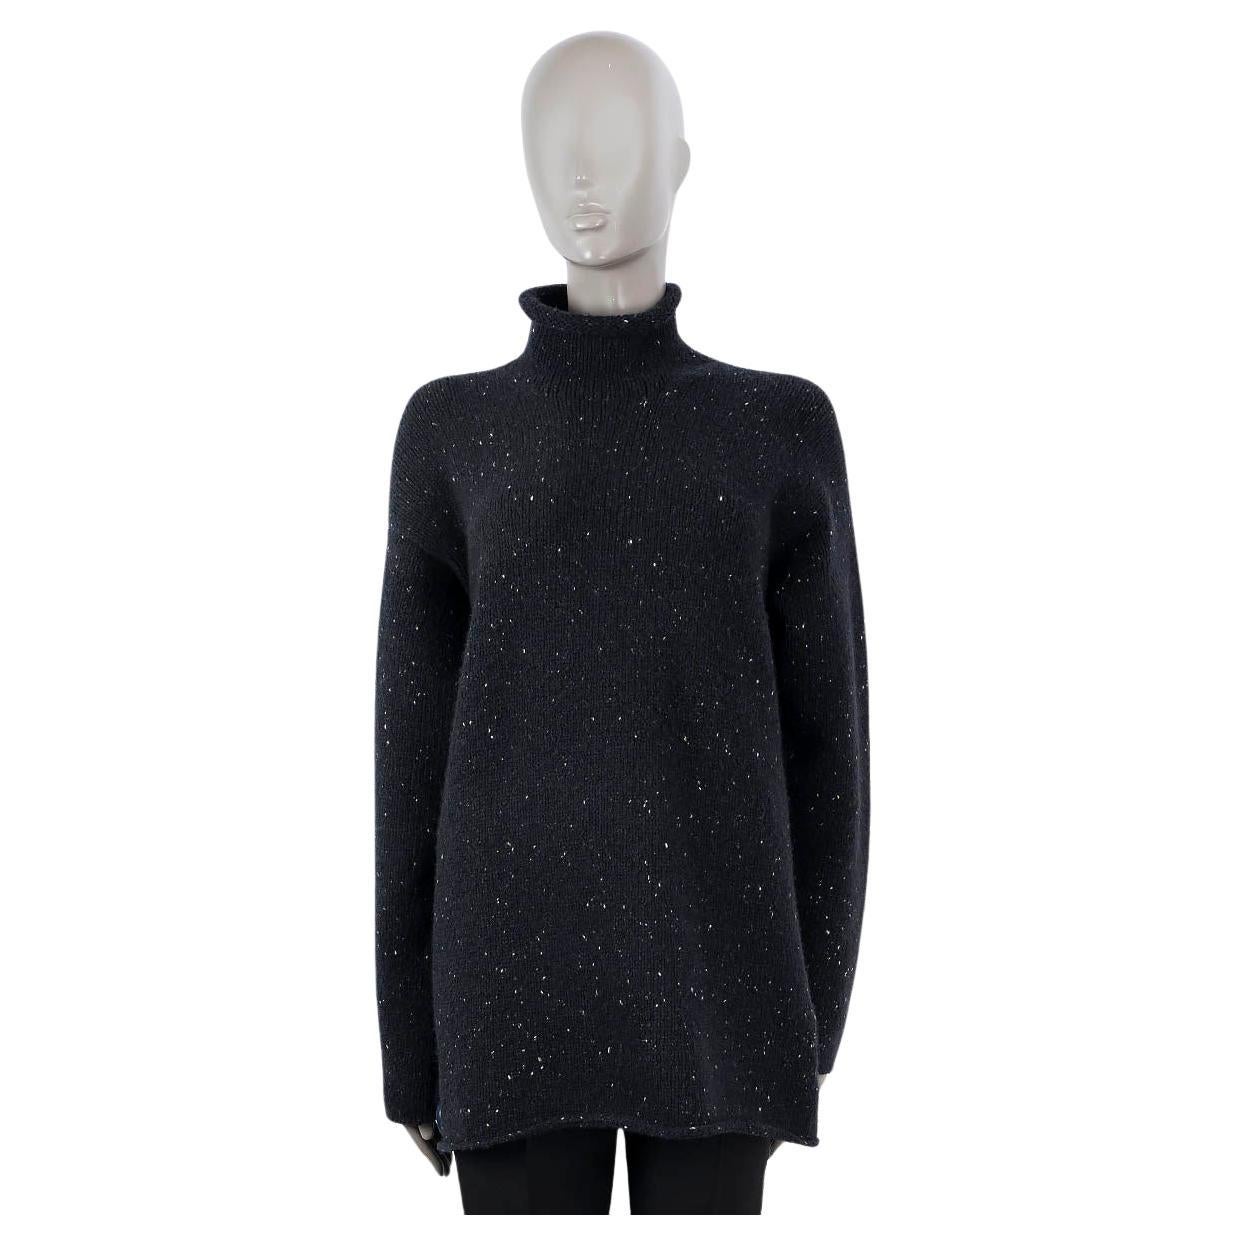 HERMES black & white cashmere SPECKLED TURTLENECK Sweater XL